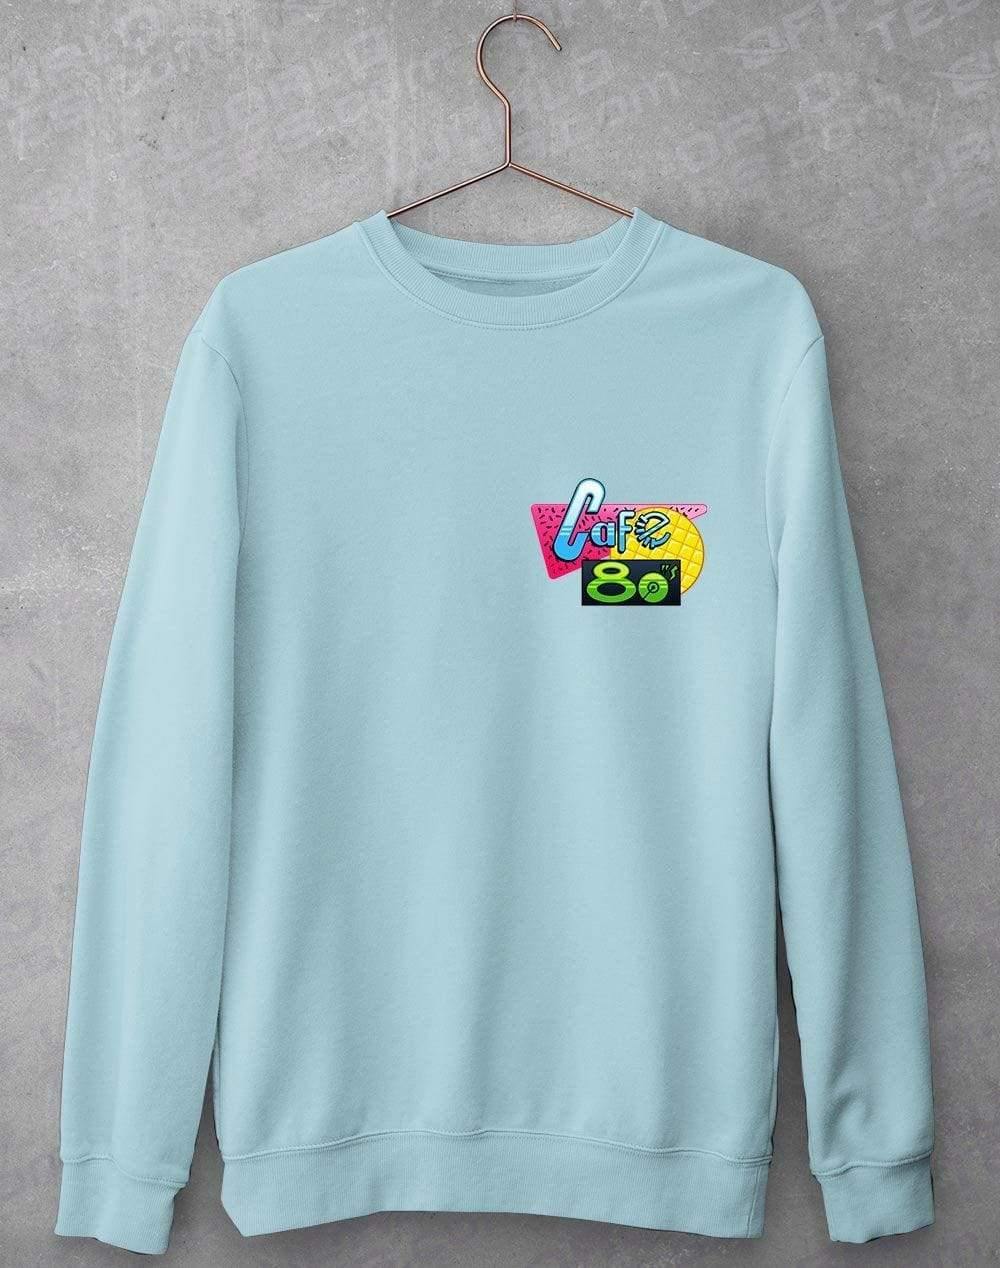 Cafe 80s Pocket Print Sweatshirt S / Sky Blue  - Off World Tees